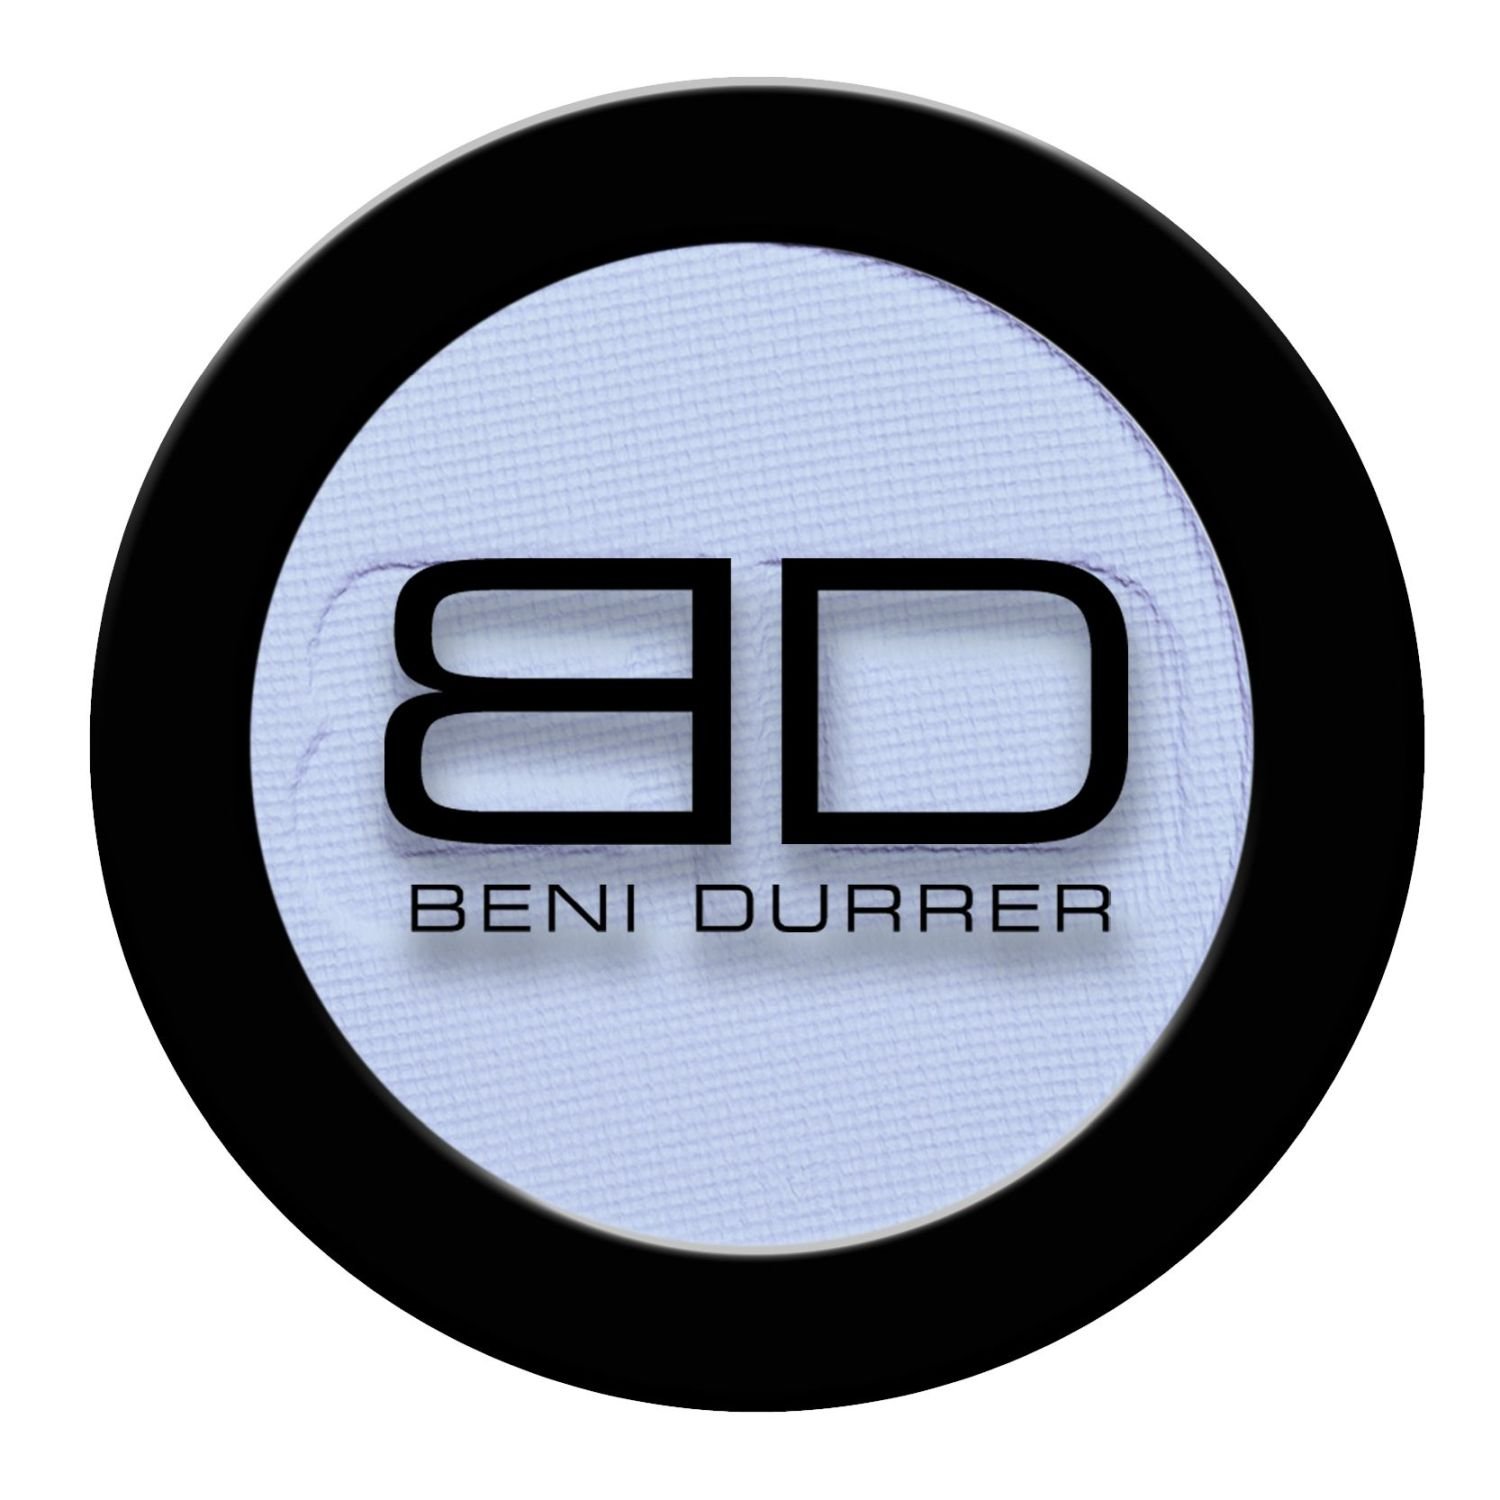 Beni Durrer 040537 - Puderpigmente Flieder, matt - kalt, 2,5 g, in eleganter Klappdose